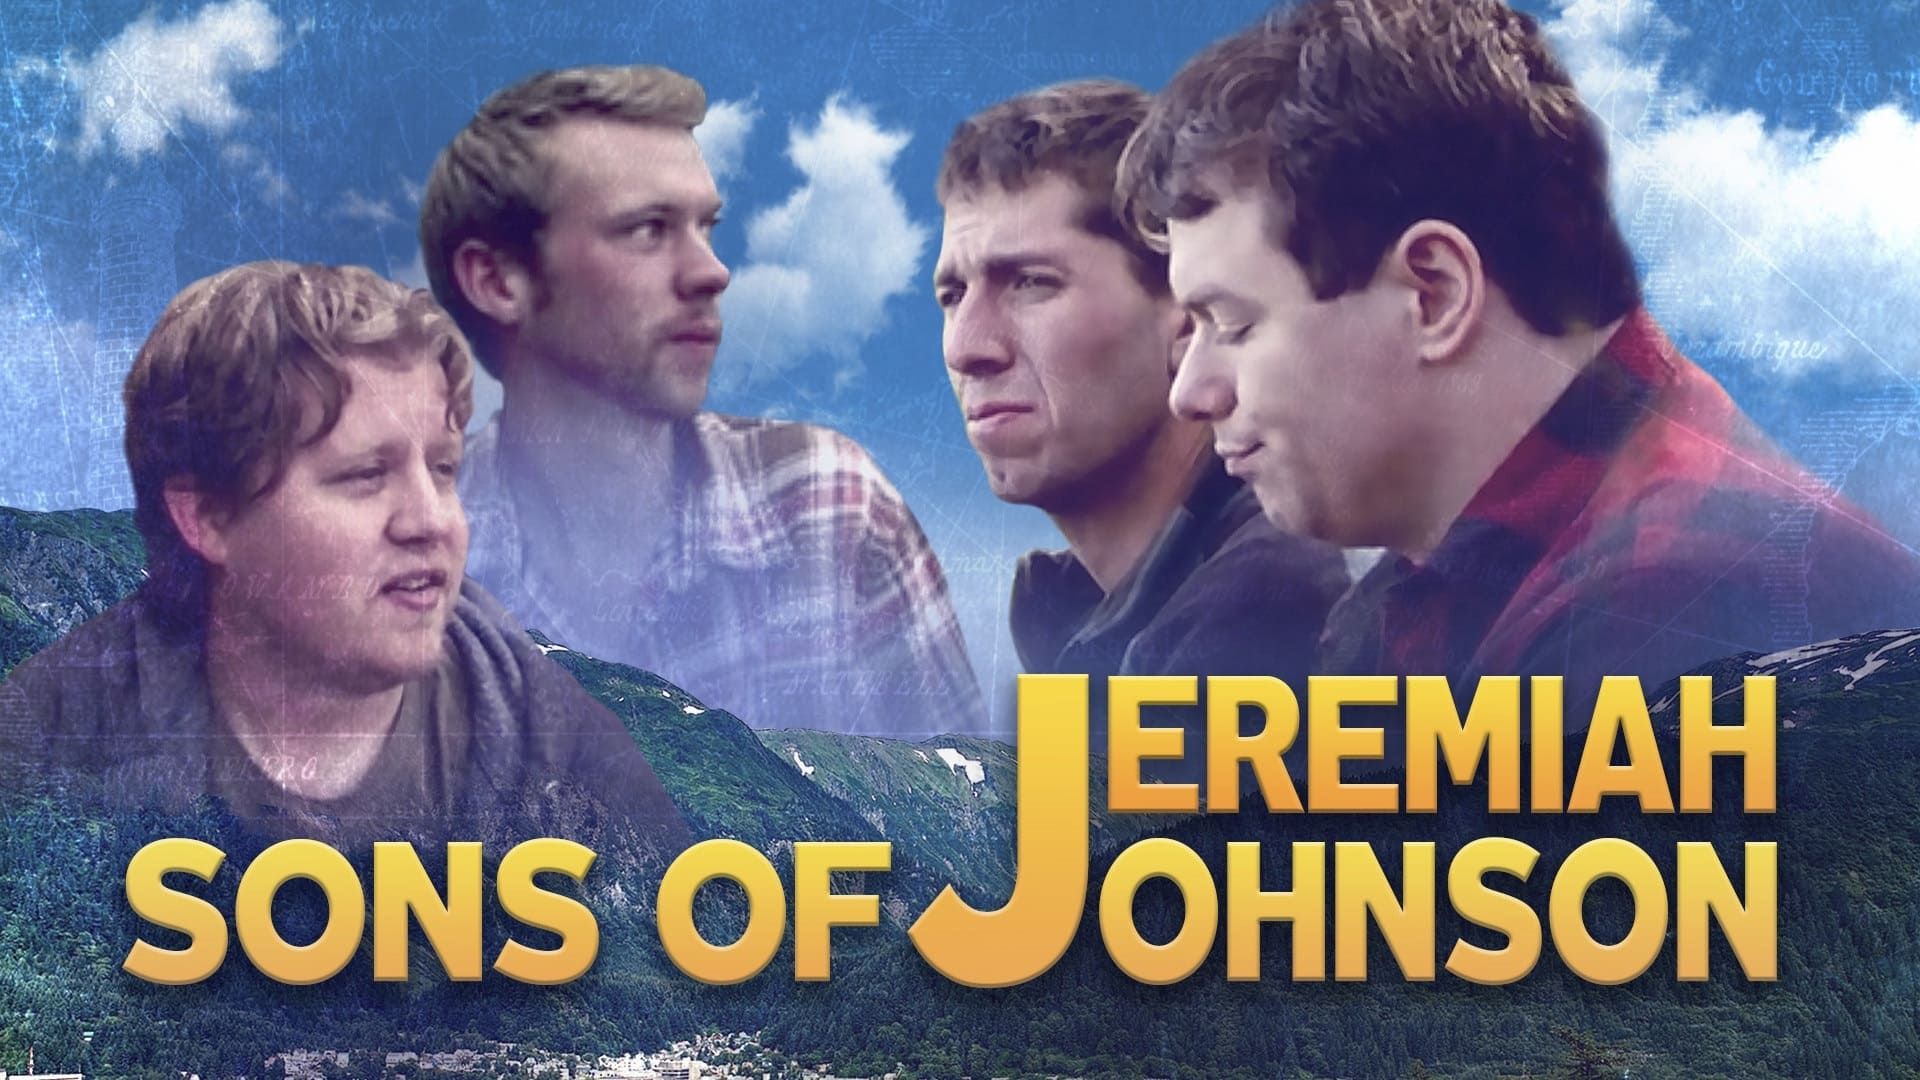 Sons of Jeremiah Johnson background